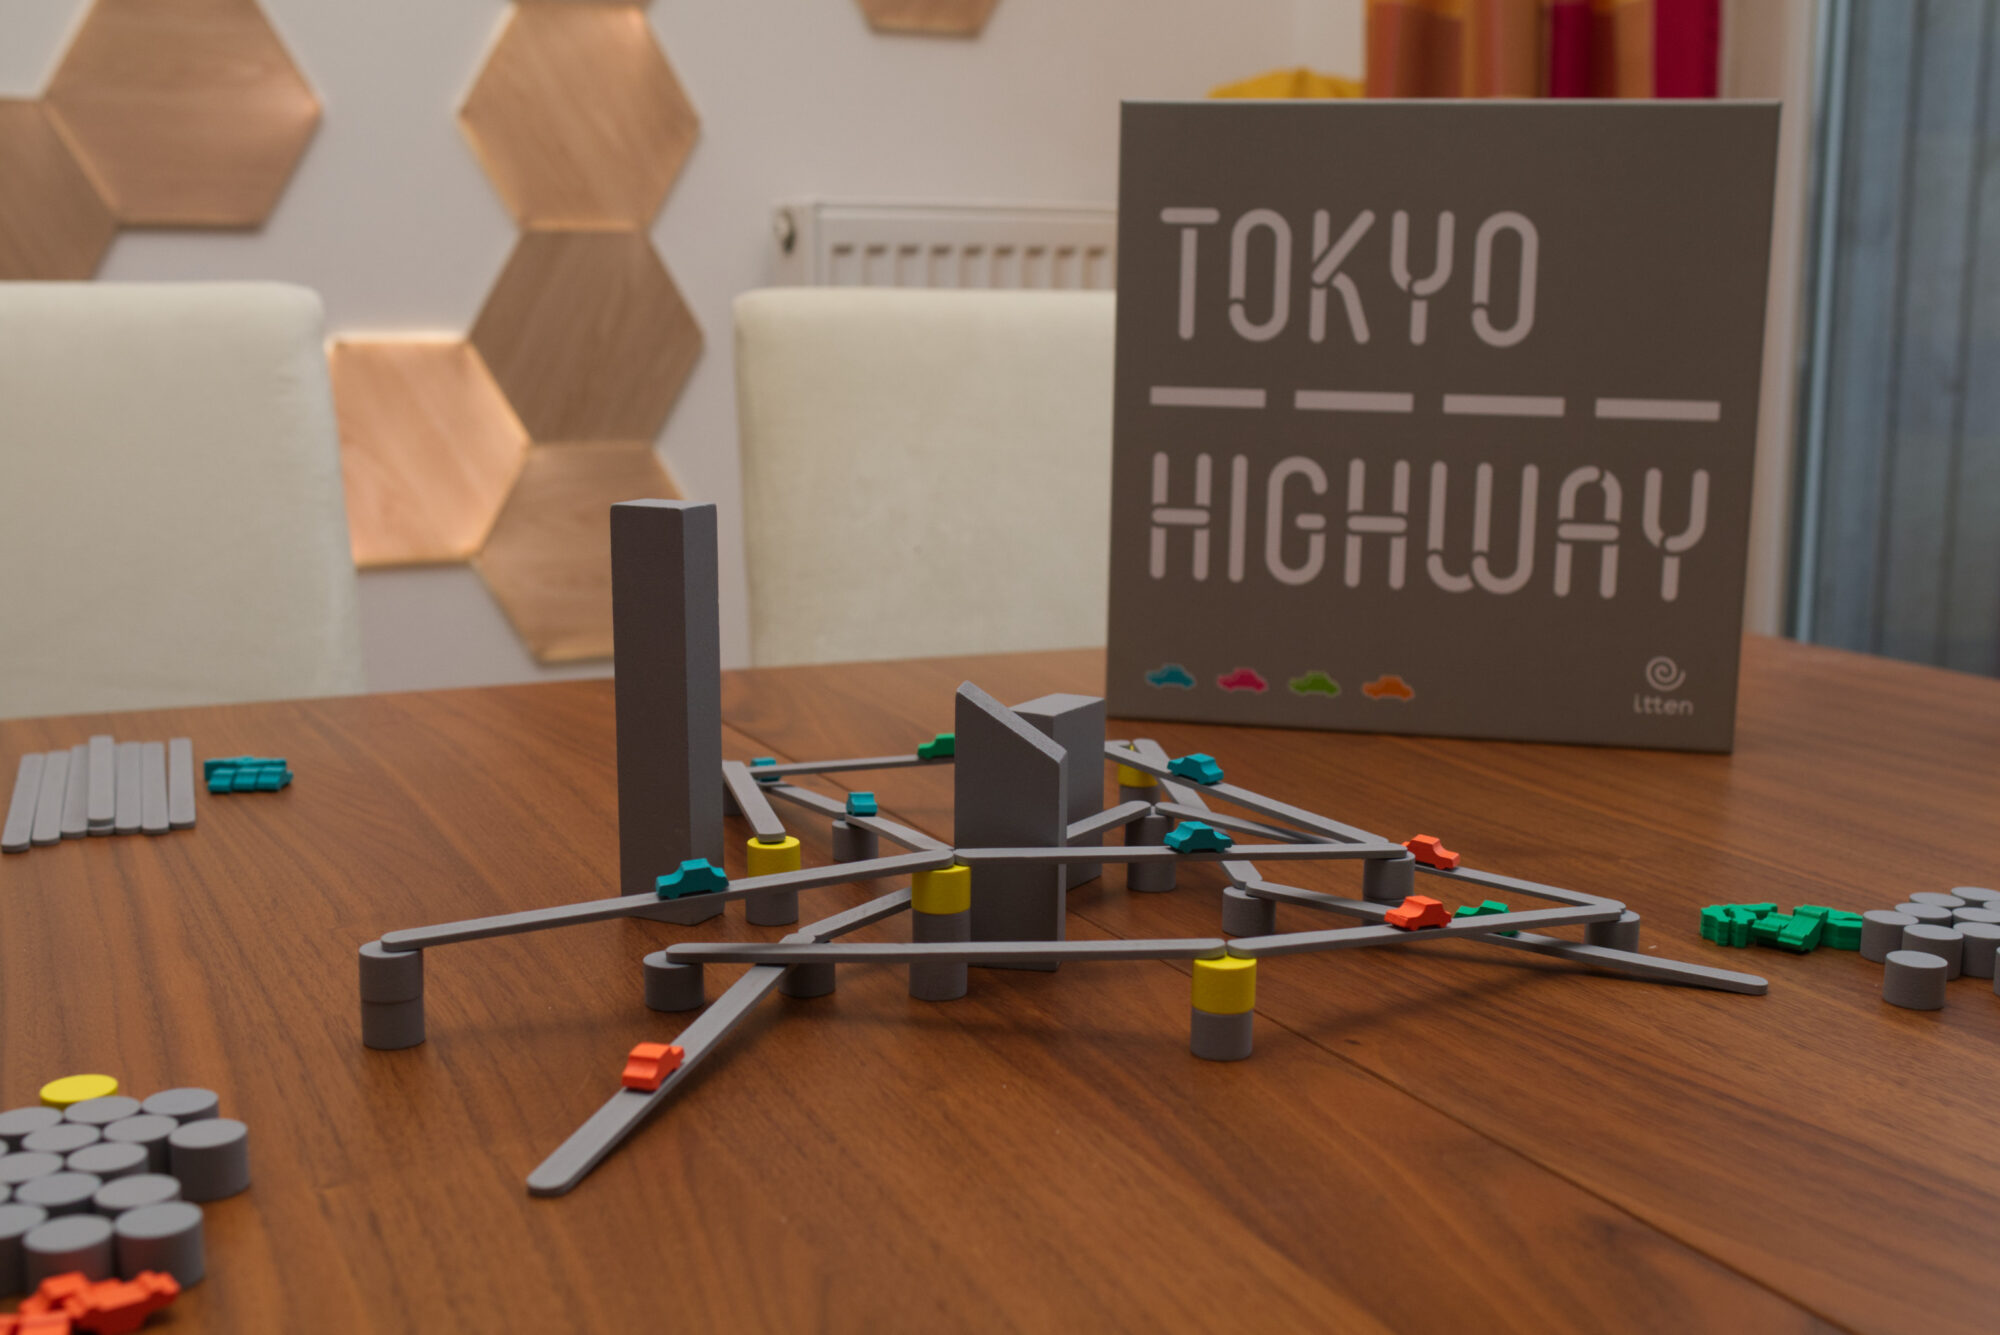 Tokyo Highway boardgame